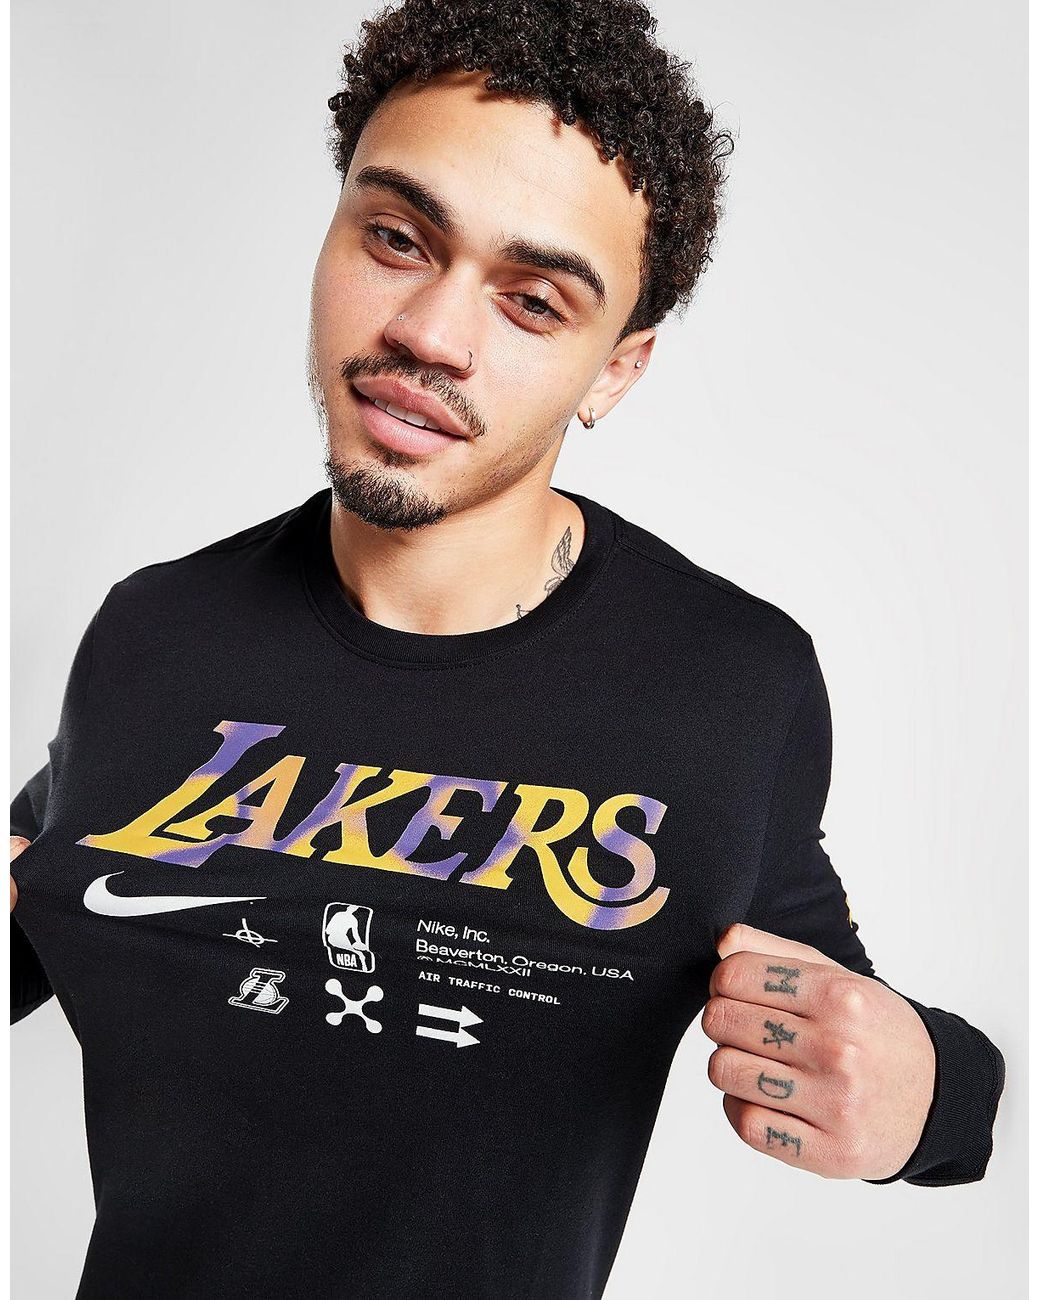 Los Angeles Lakers Courtside Men's Nike NBA Long-Sleeve Max90 T-Shirt